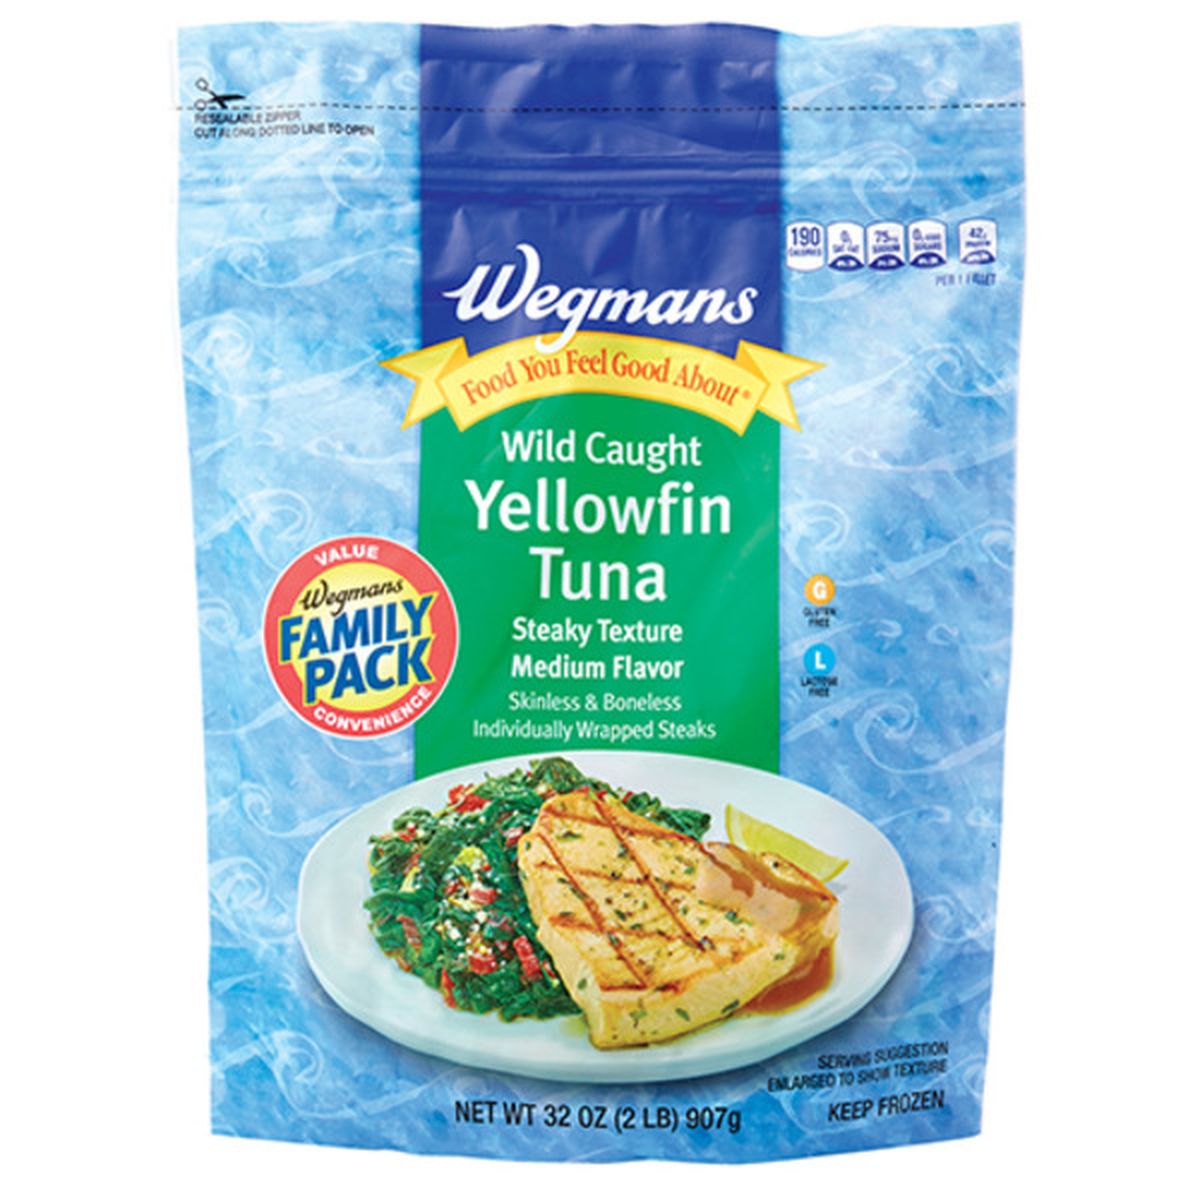 Calories in Wegmans Wild Caught Yellowfin Tuna, FAMILY PACK